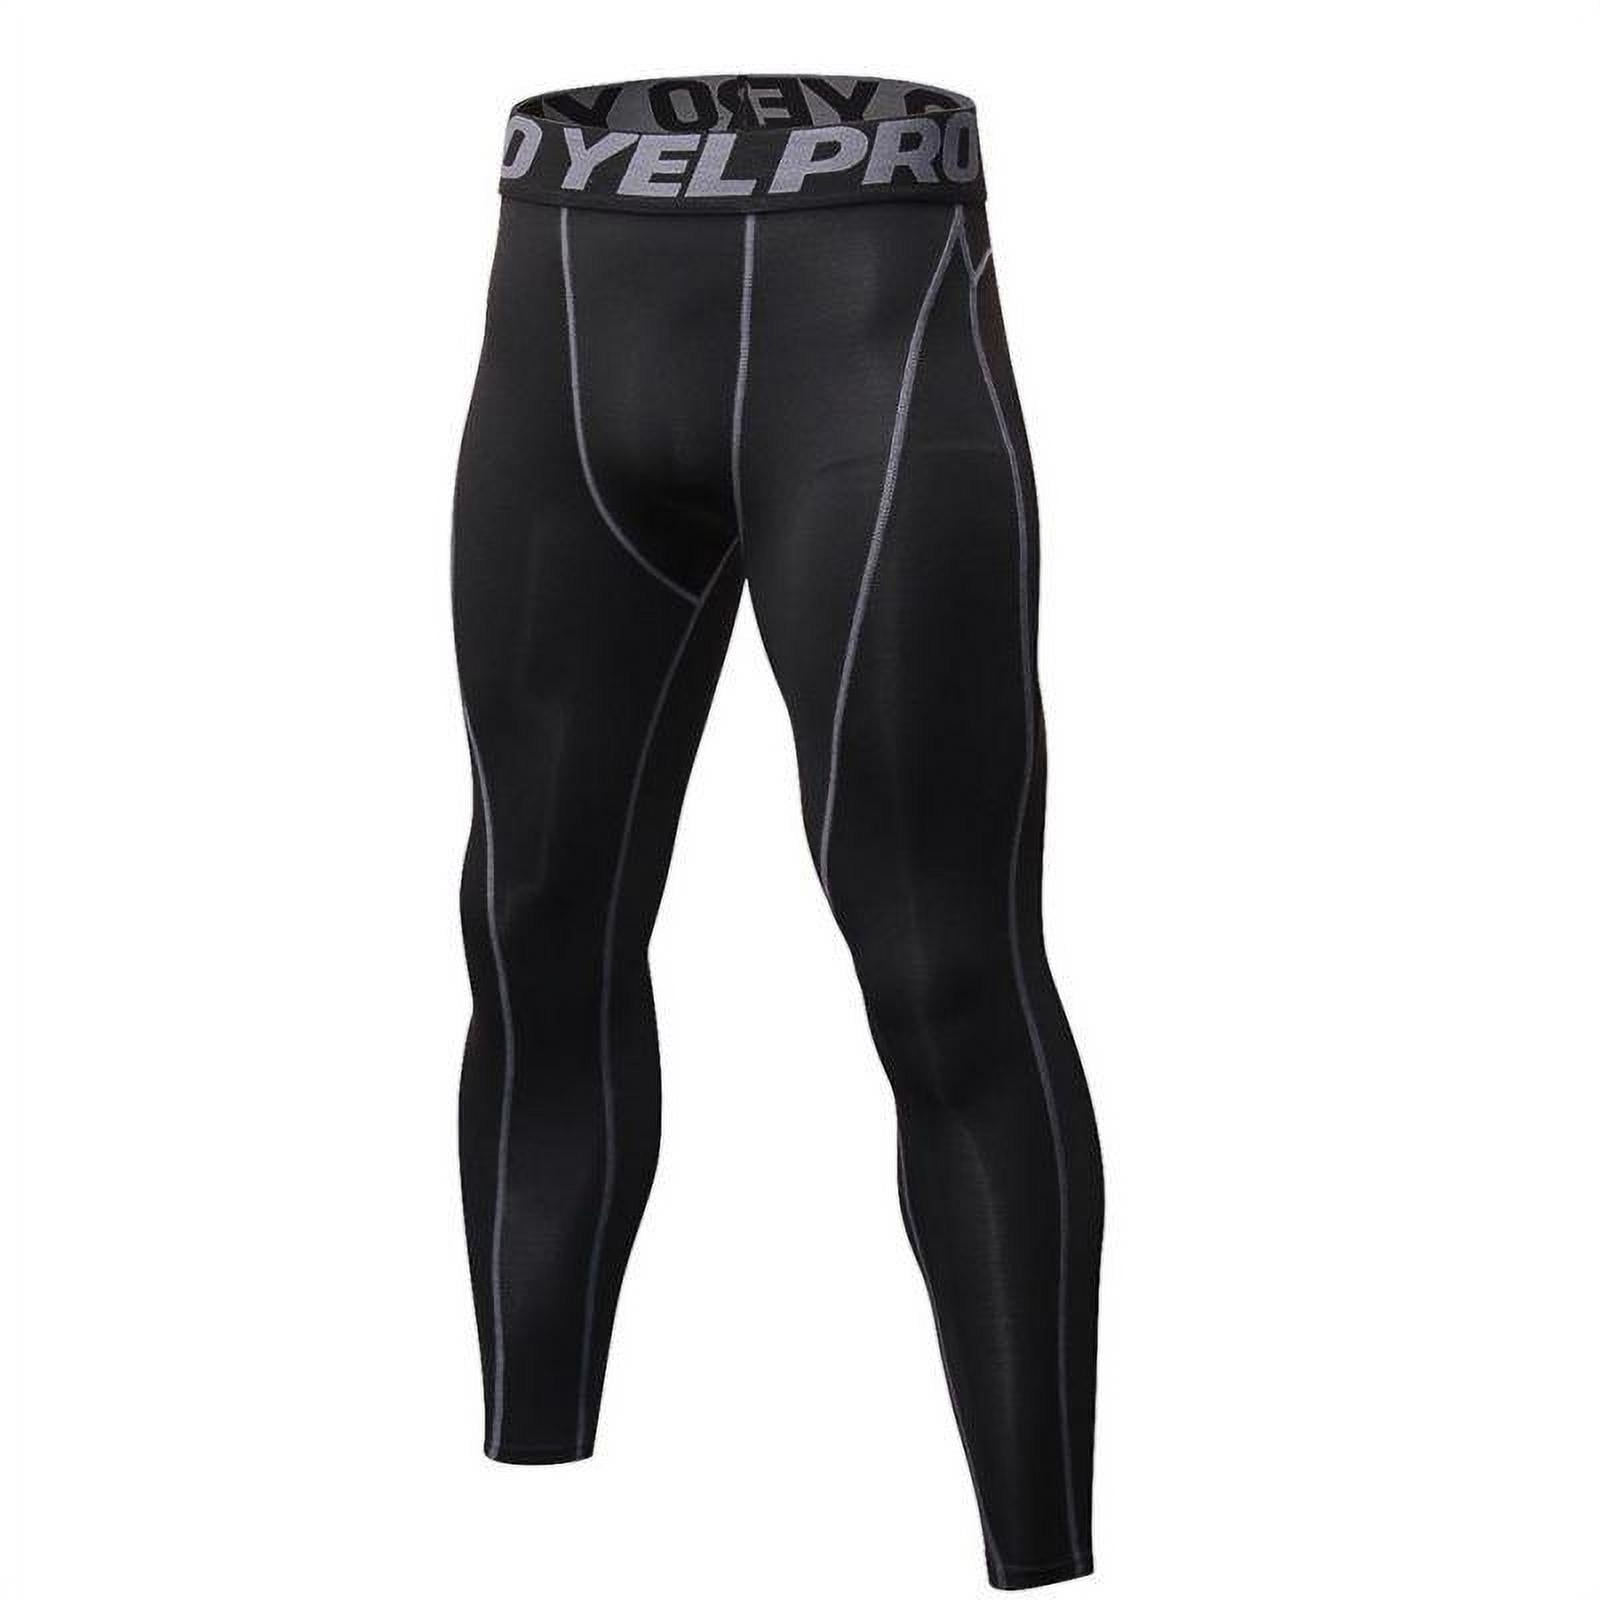 NATURET Compression Pants Baselayer Running Yoga Mens Sports Cool Dry Shaper Gym Workout Leggings Athletic